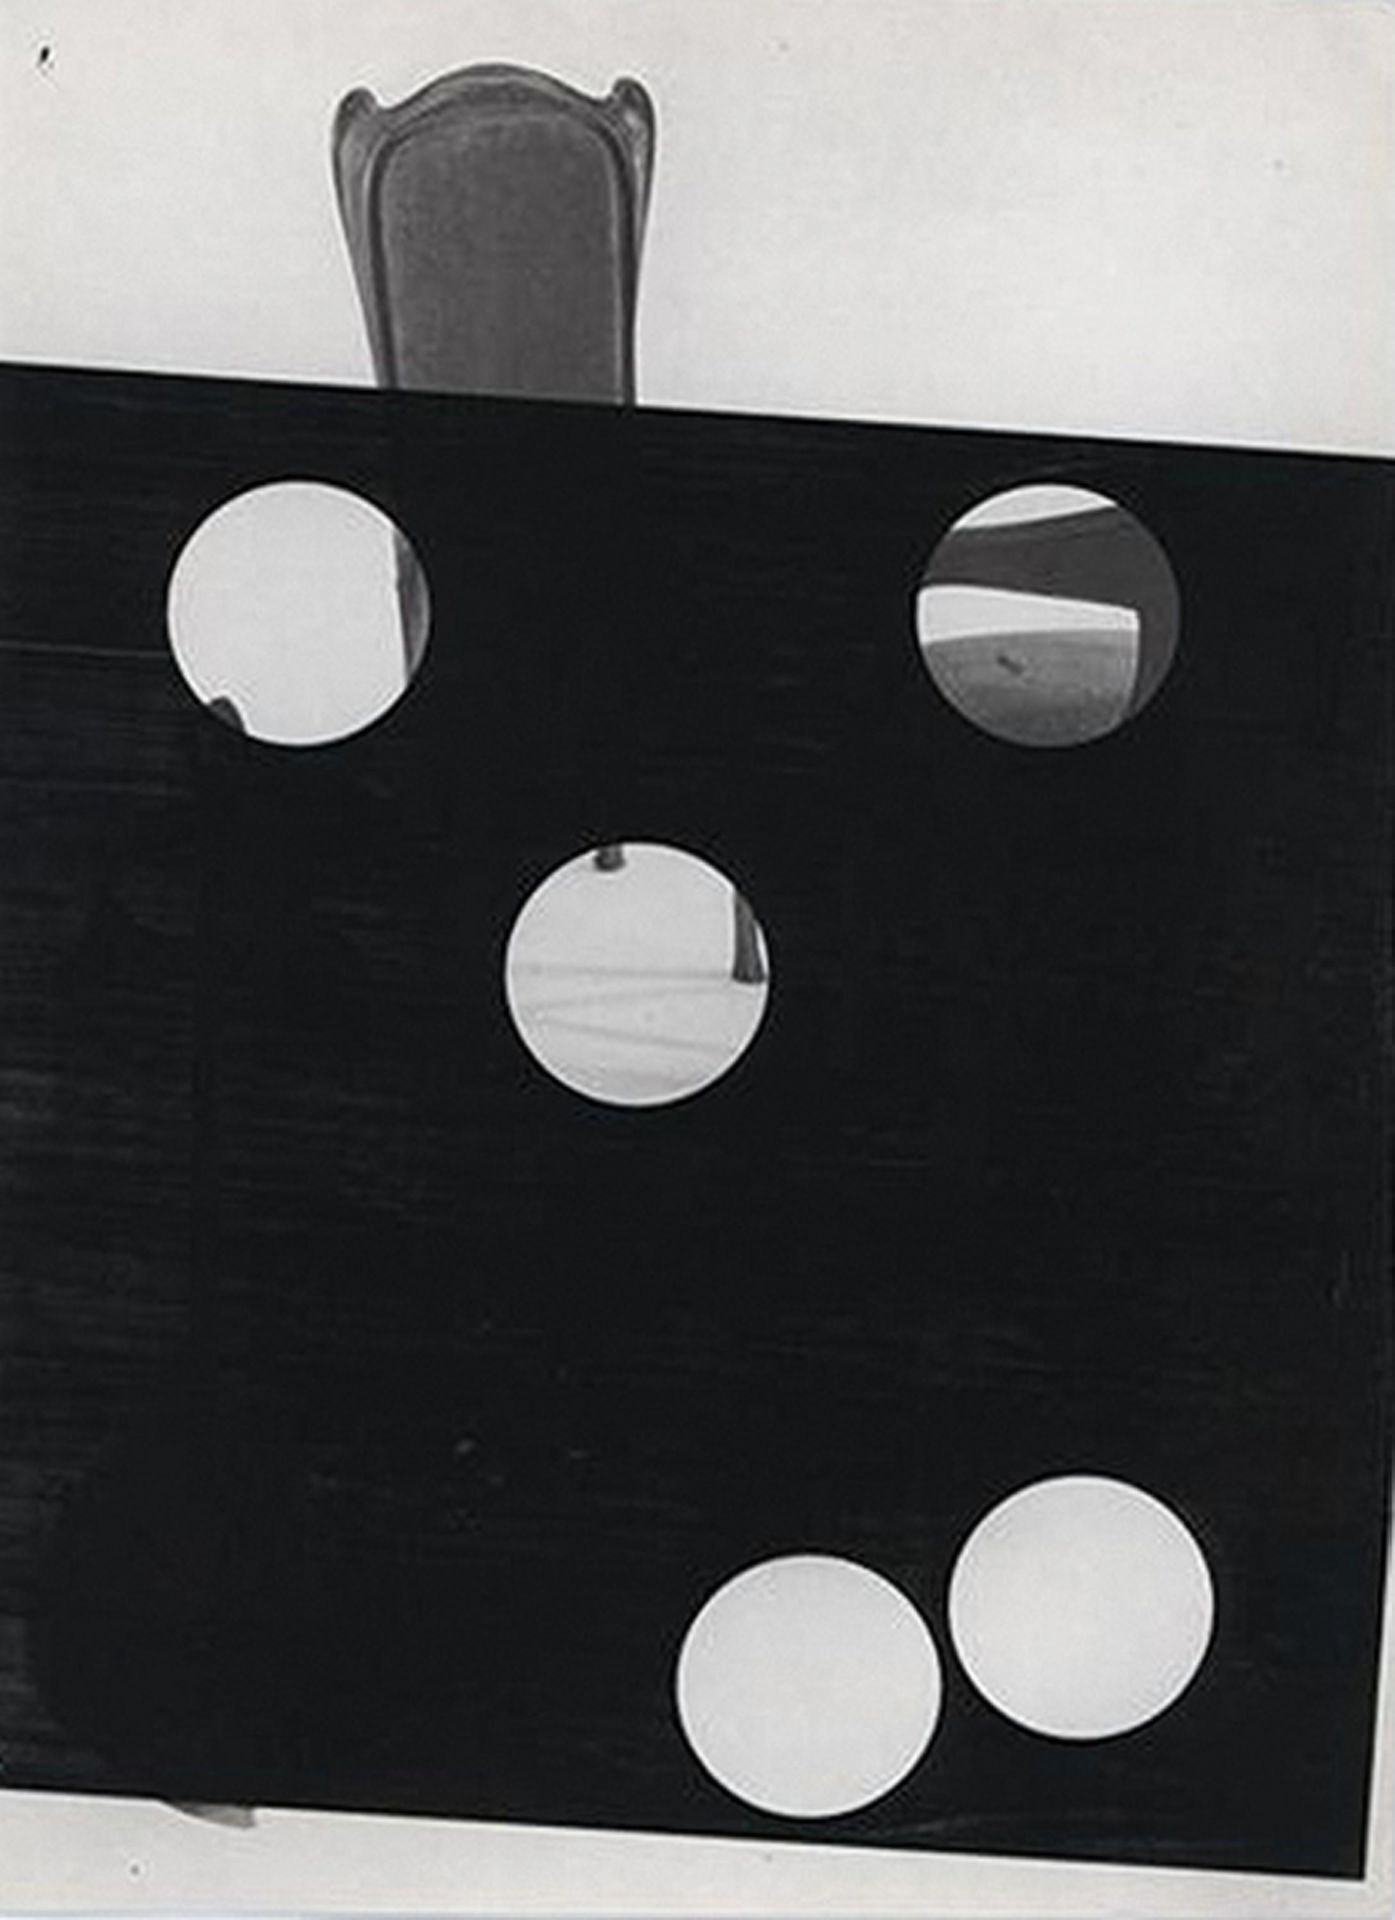 Sonderregelungen-Special-Conditions_Achenbach-Art-Auction

GUYTON, WADE1972 Hammond,